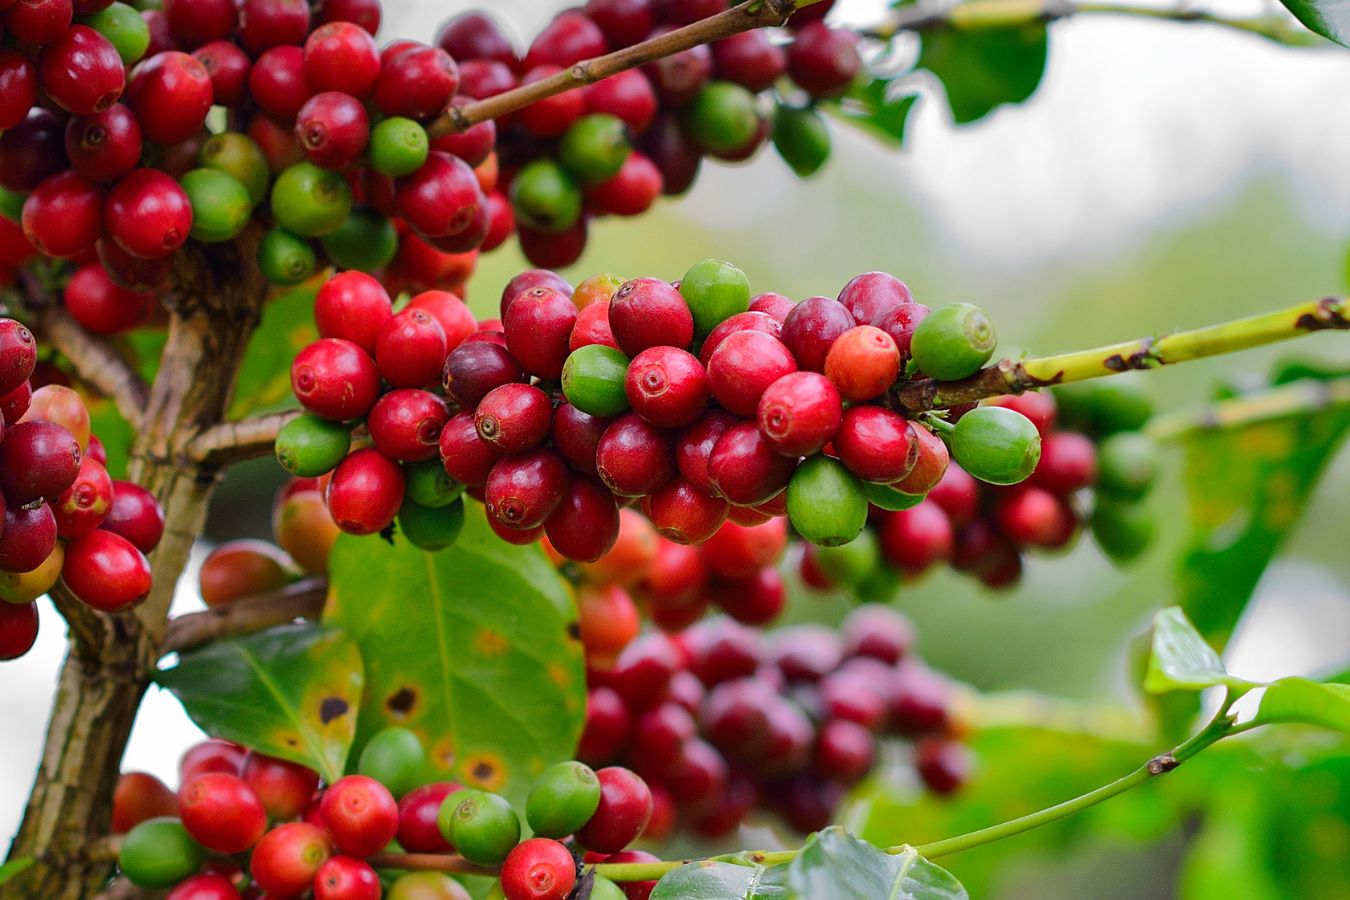 Coffee price today - October 15, 2022 - Helena Coffee Vietnam